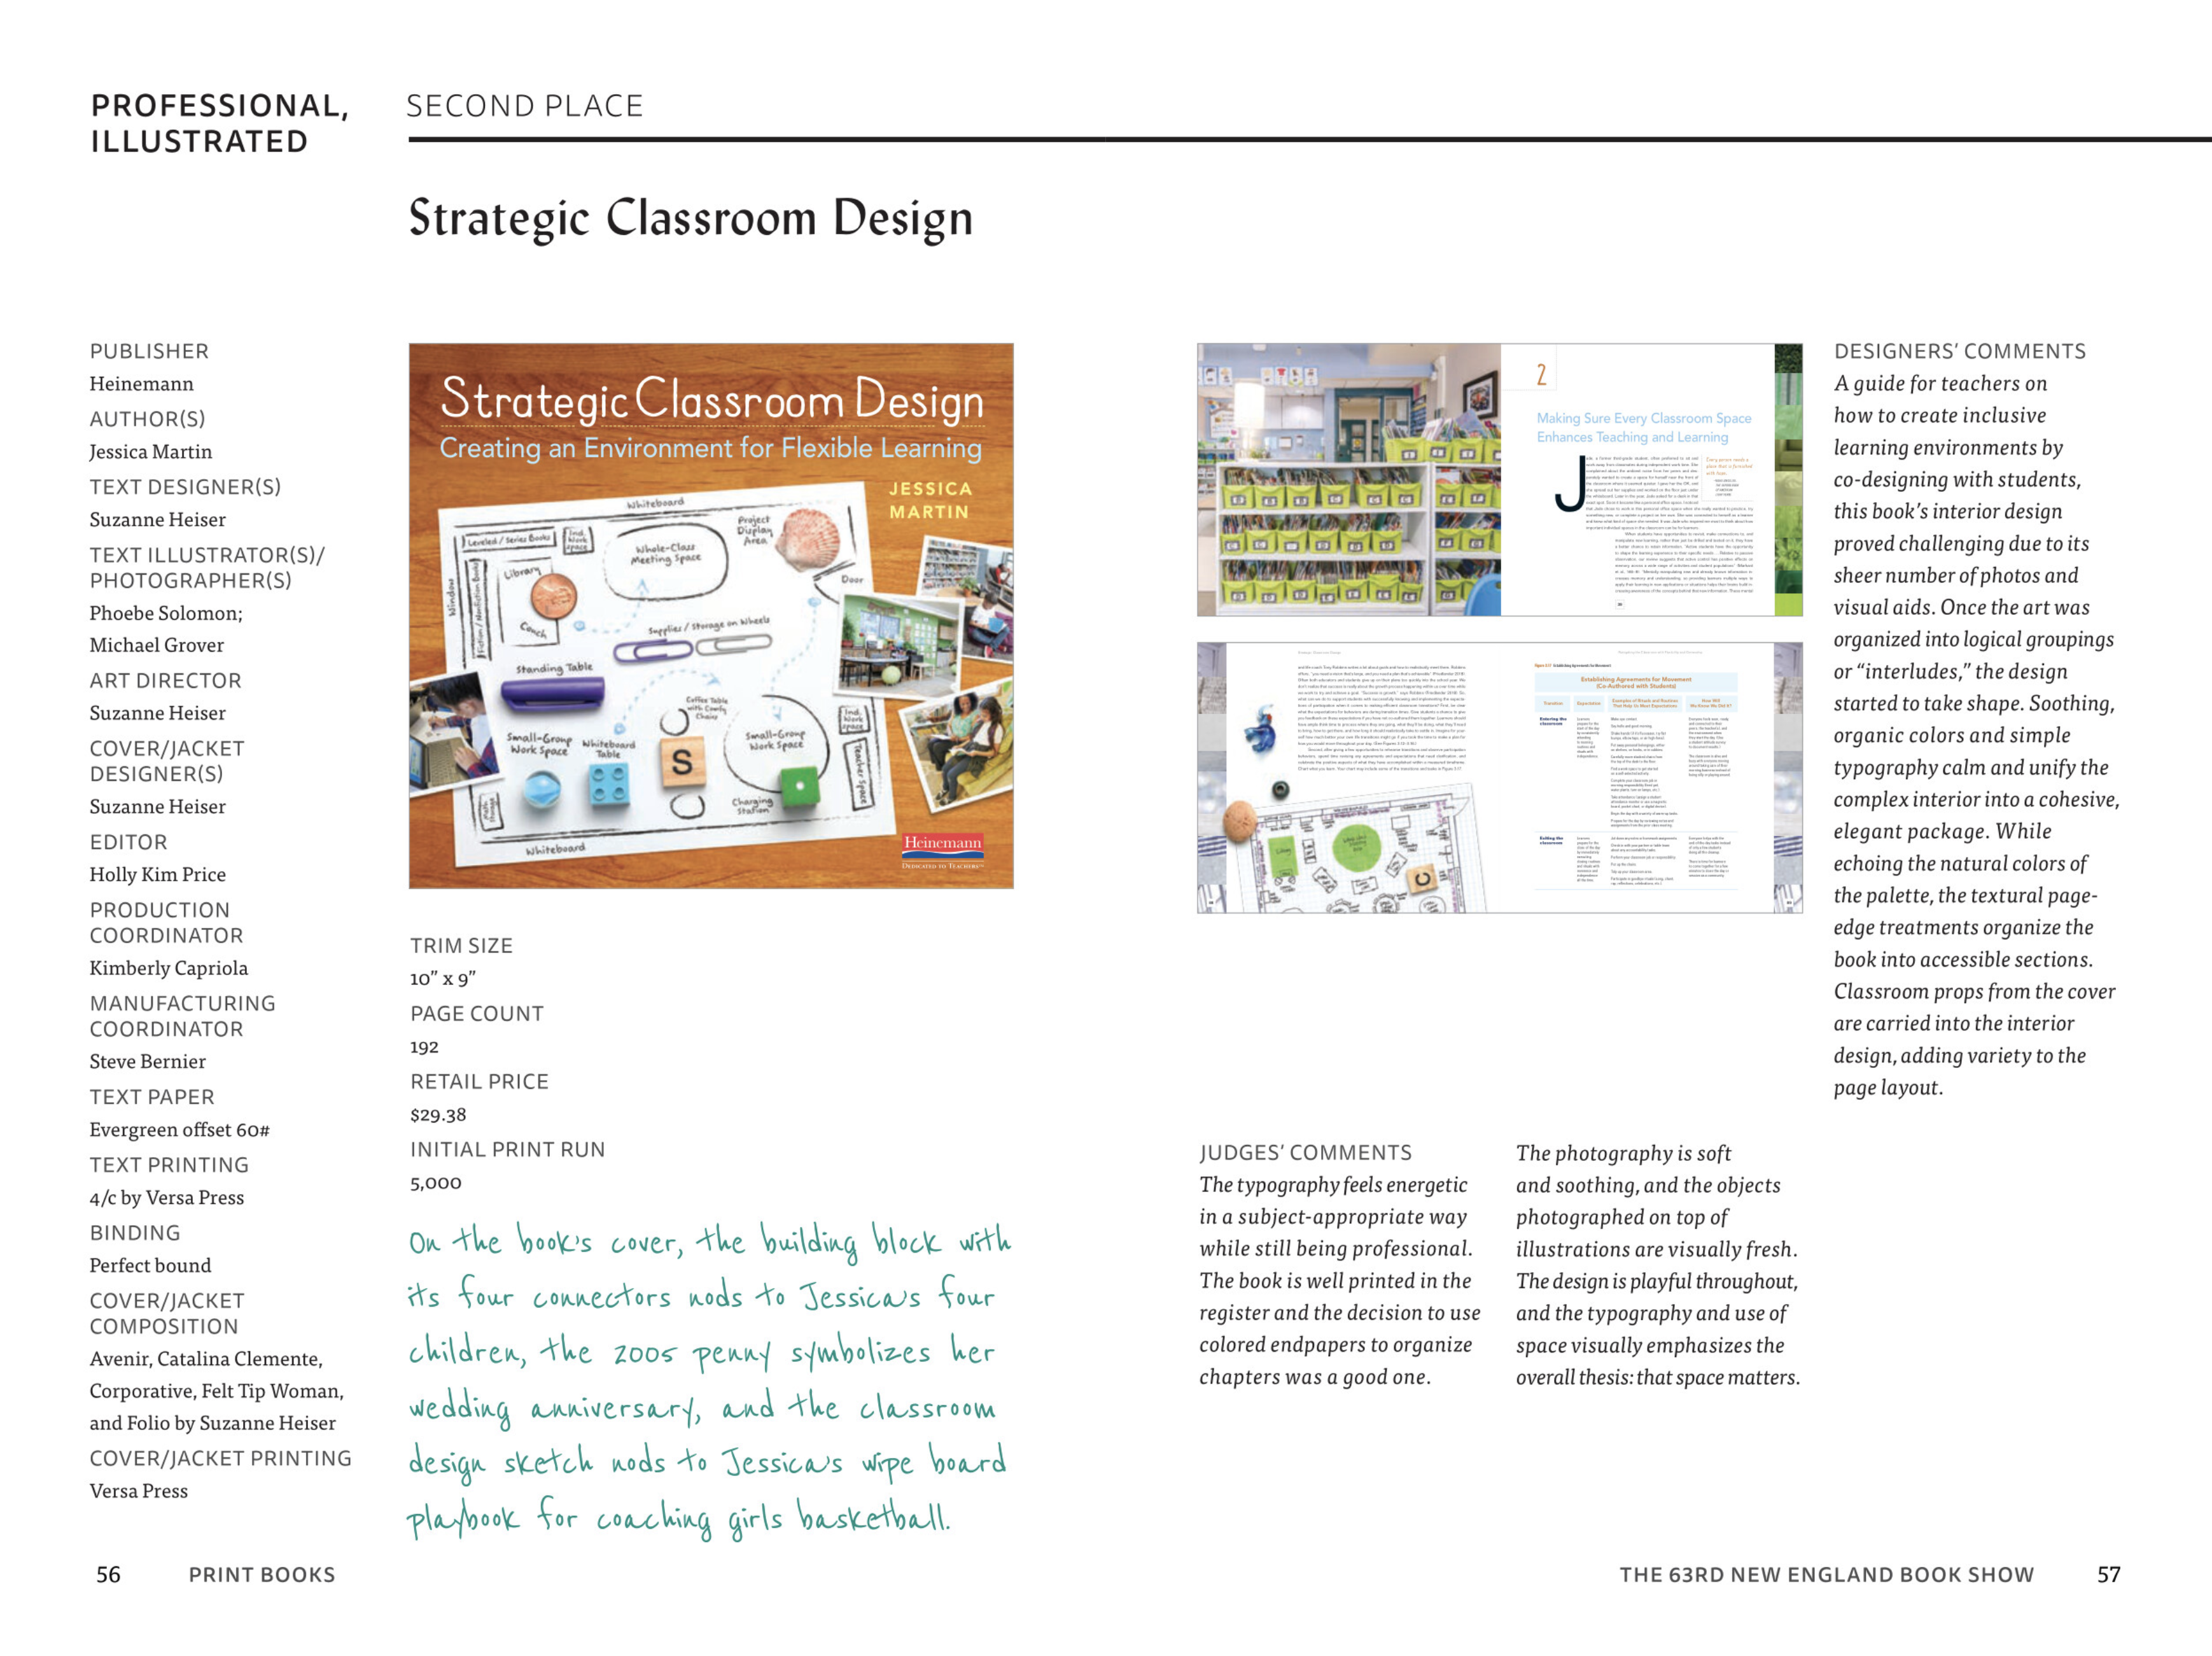 NEBS Strategic Classroom Design